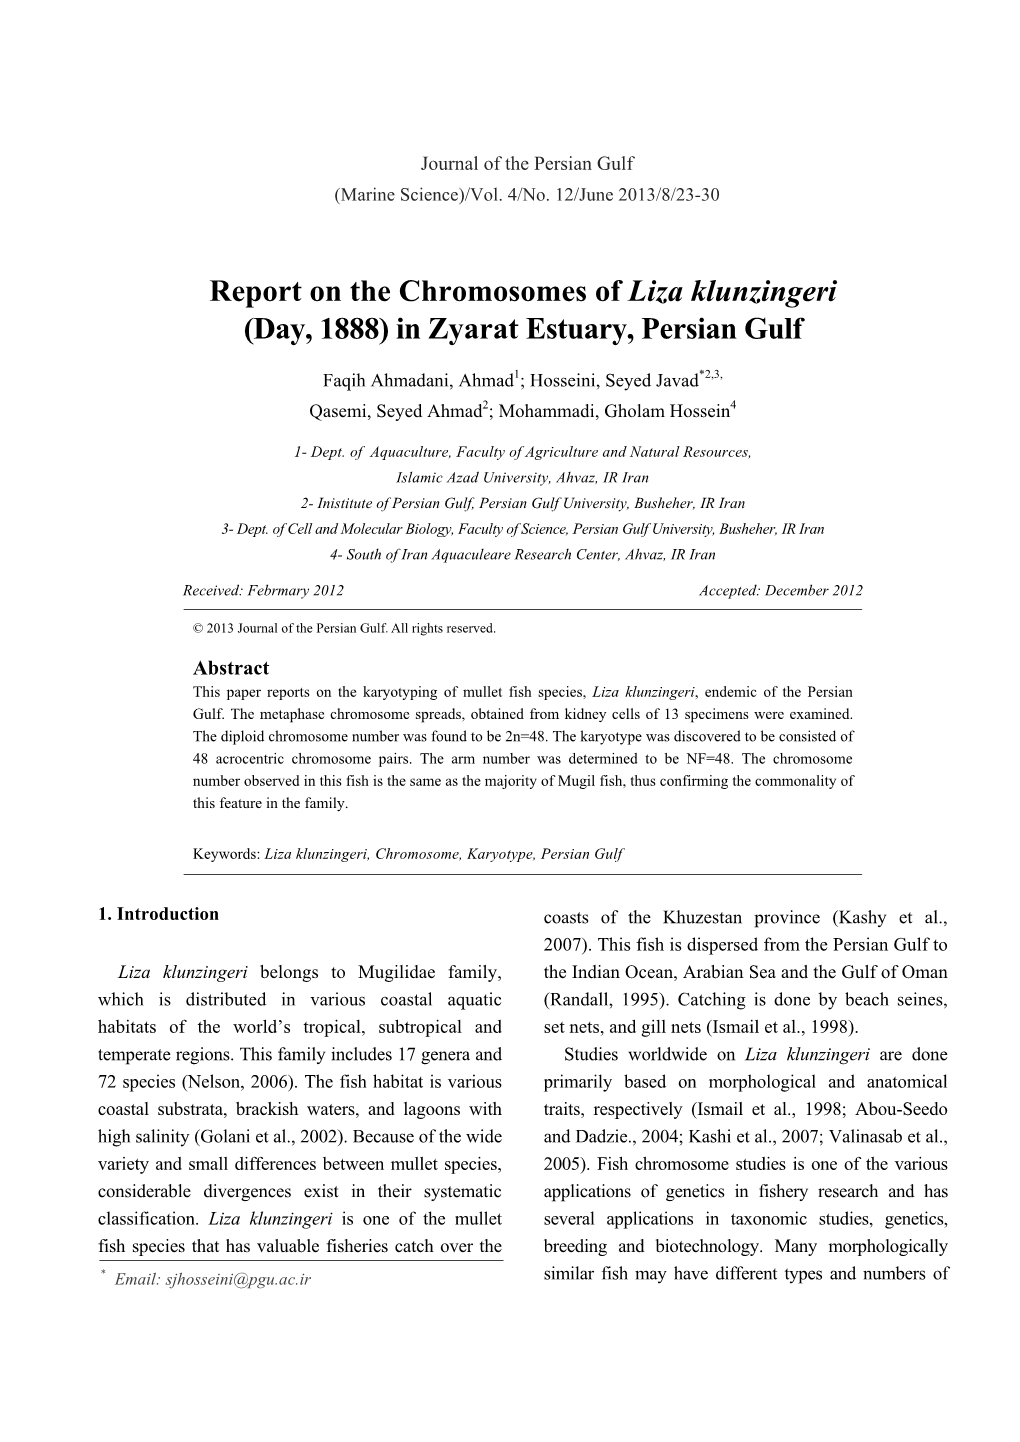 Report on the Chromosomes of Liza Klunzingeri (Day, 1888) in Zyarat Estuary, Persian Gulf